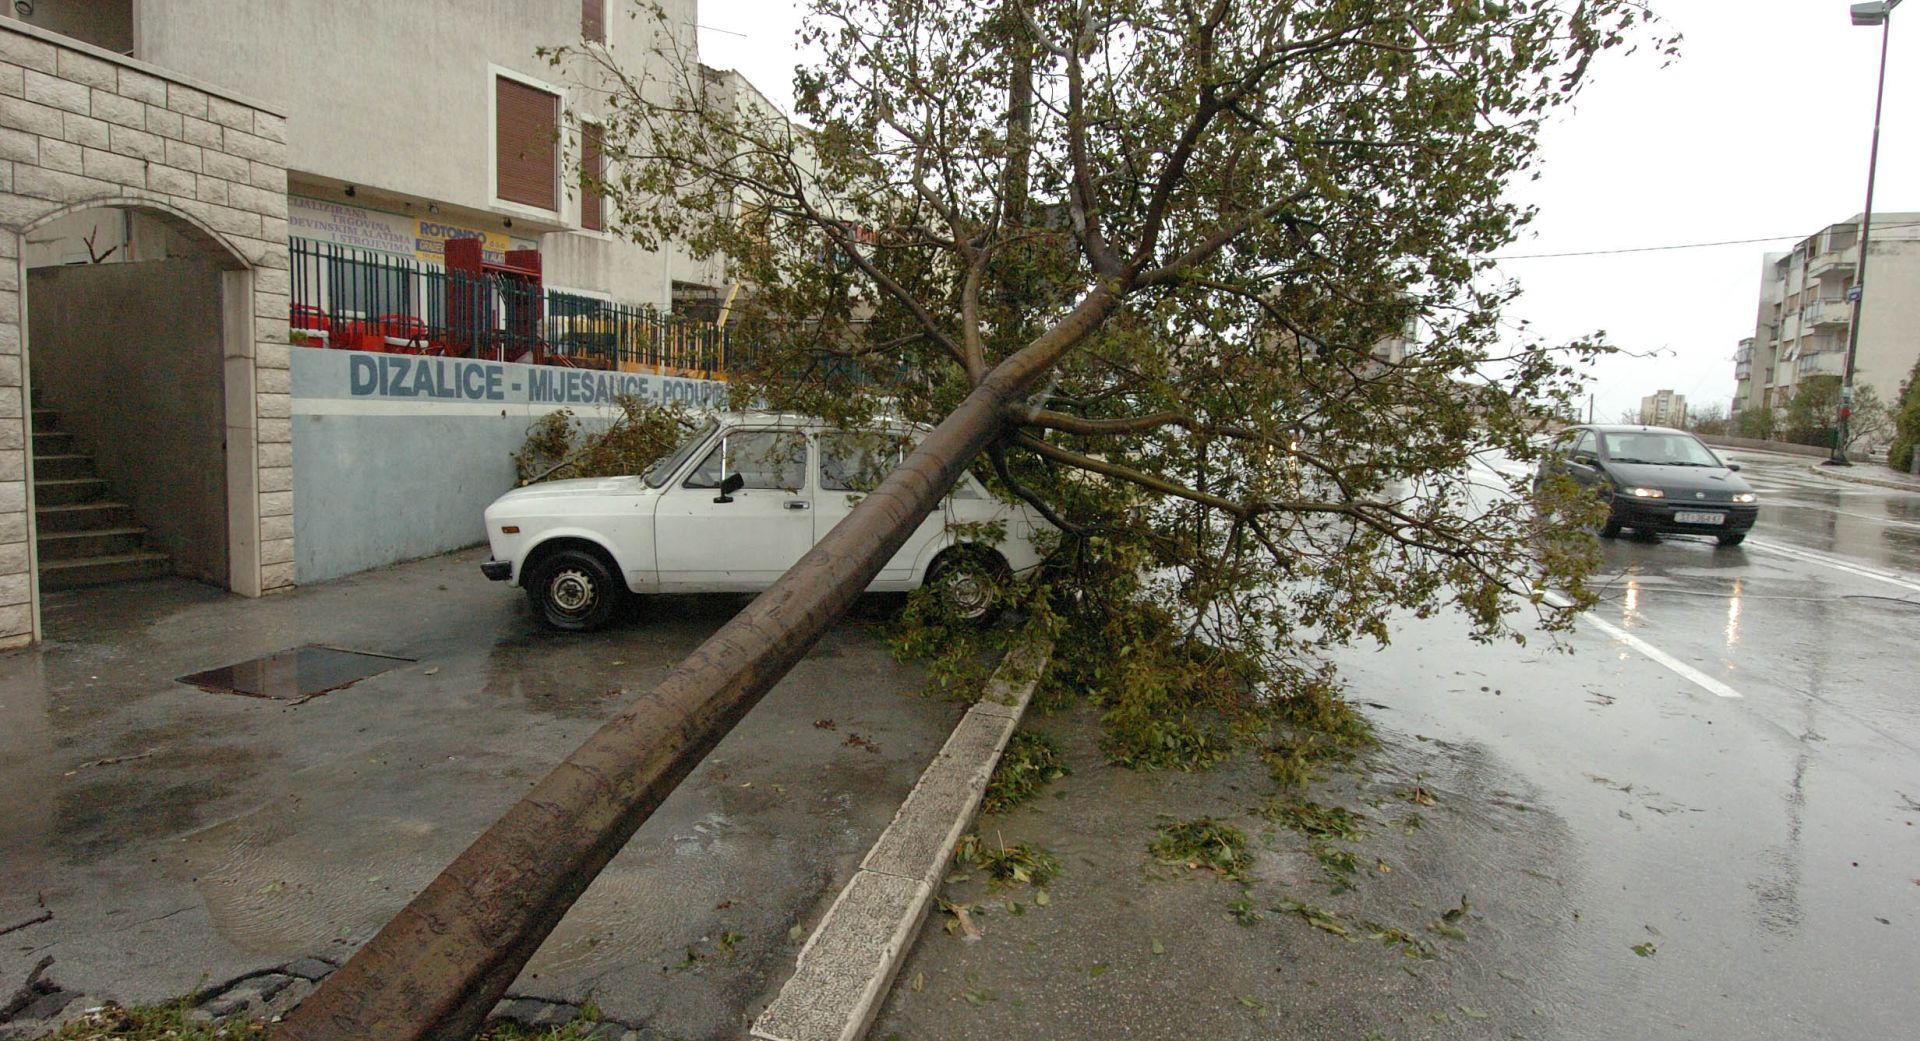 Split, 14. 11. 2004 - Olujna bura koja je na mahove dostizala i 140km/h na splitskom je podruèju prouzrokovala brojne tete i prekide u prometu. Na slici stablo koje je olujna bura ièupala i prevrnula ga na automobil na jednoj od splitskih prometnica.
foto FaH